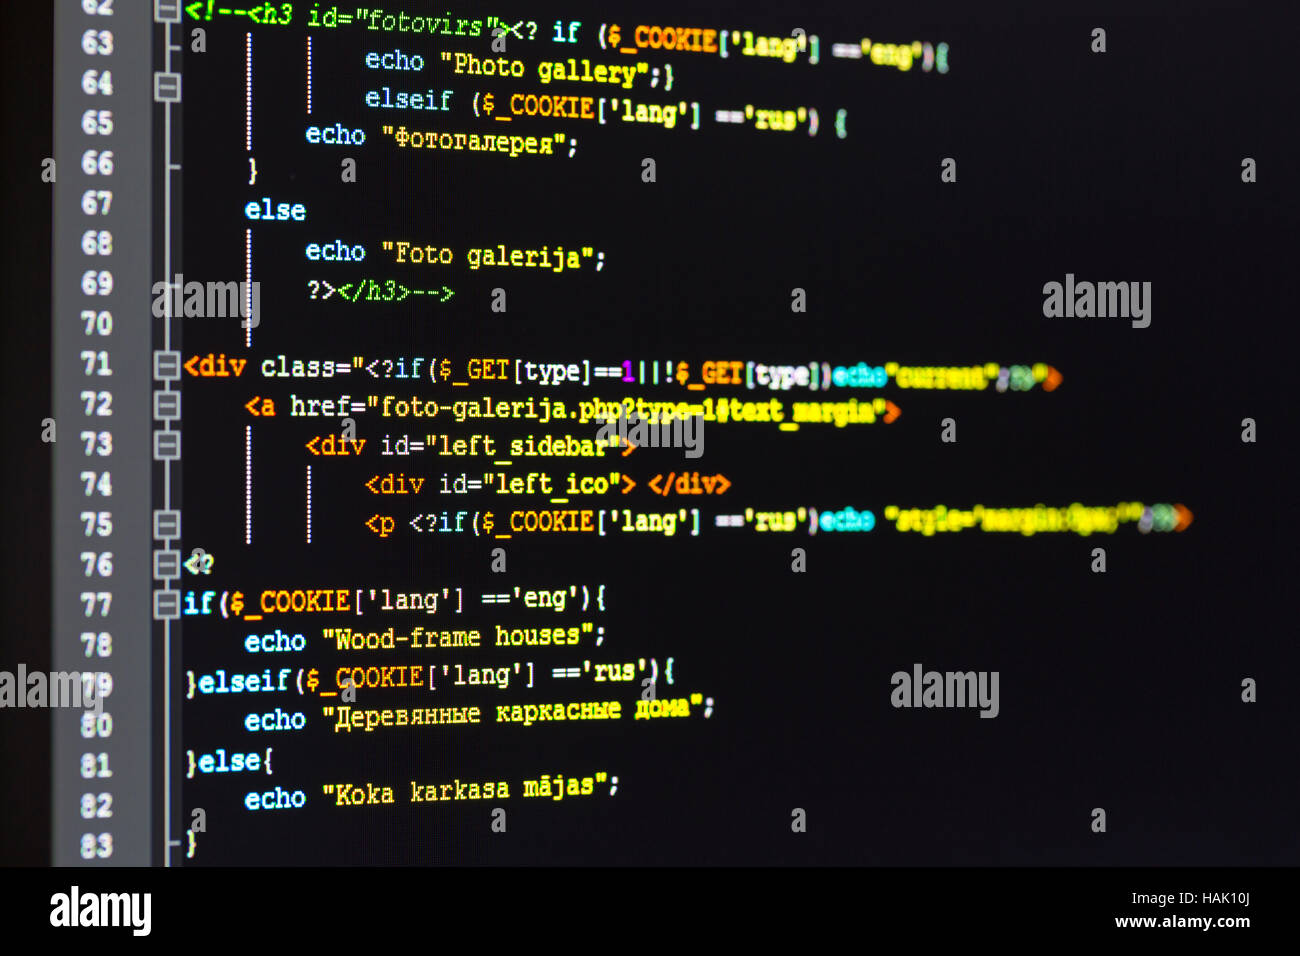 website development - programming code on computer screen Stock Photo